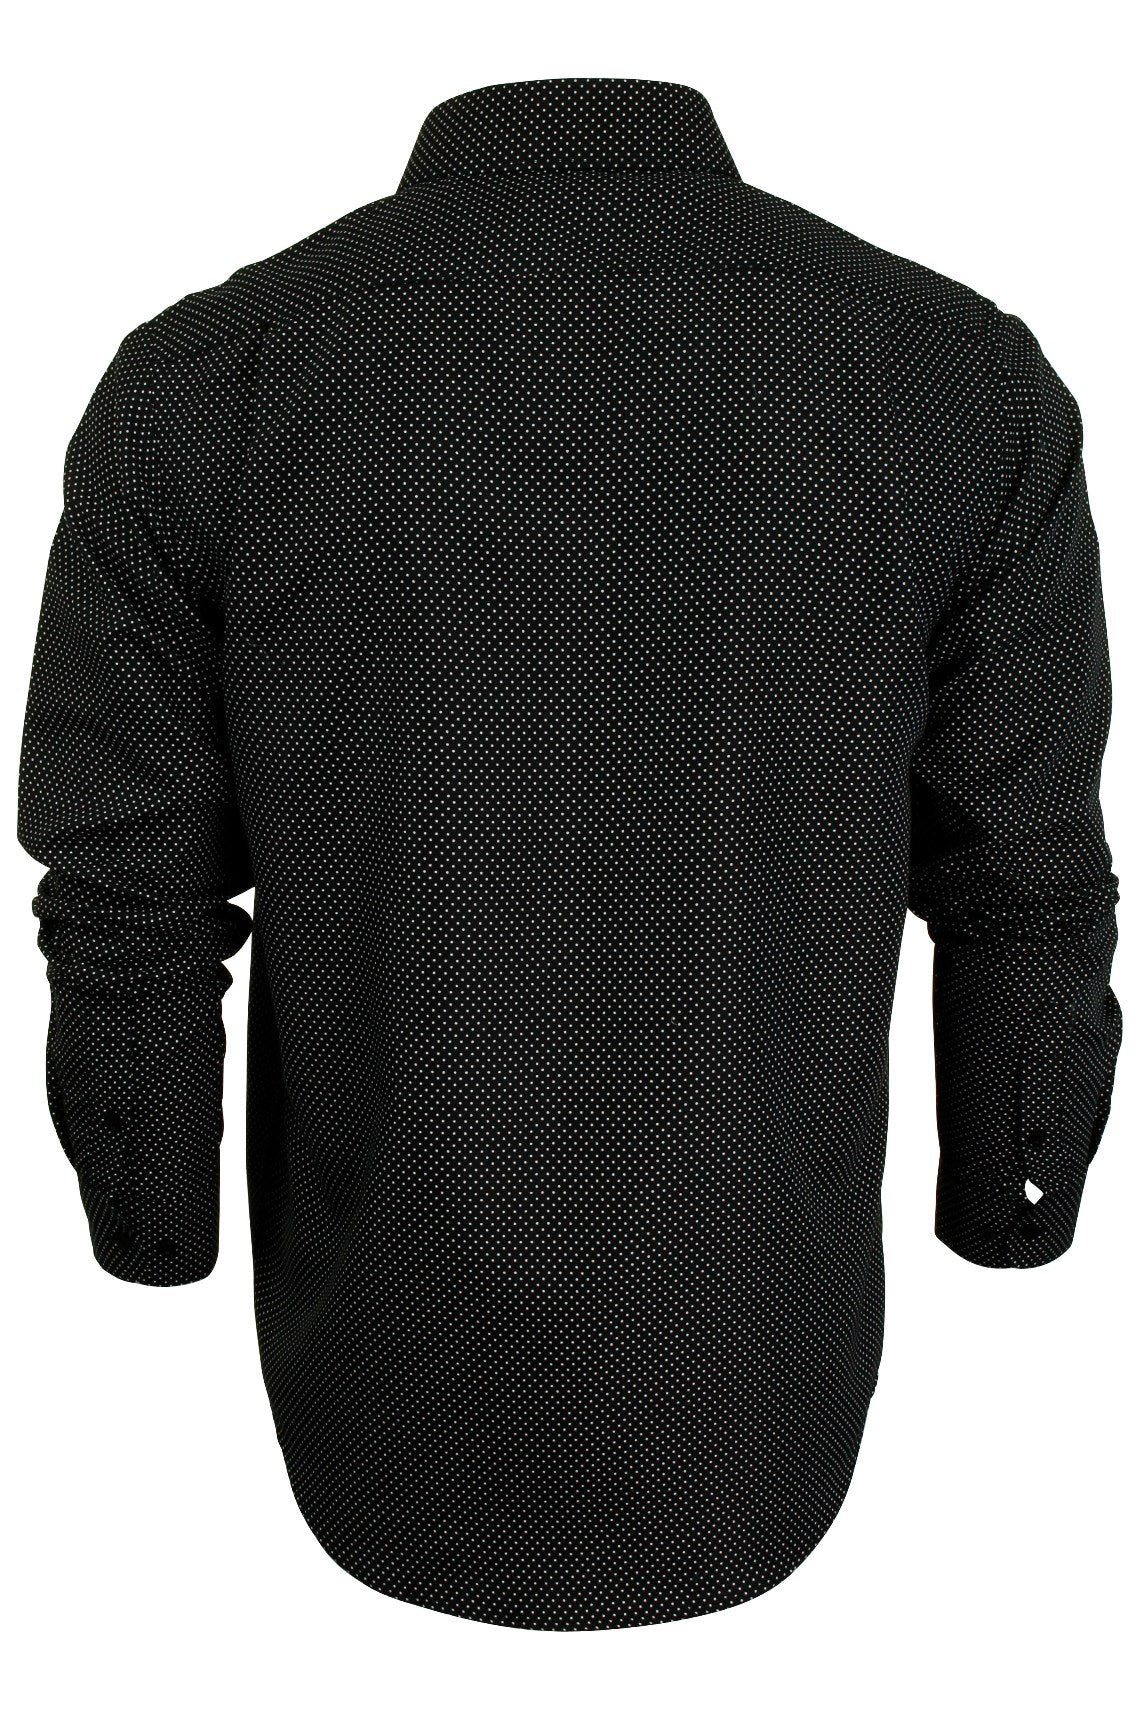 Mens Spotted Print Shirt by Process Black 'Cell' Long Sleeve Brave Soul, 03, Msh-Pb475Cell, Jet Black